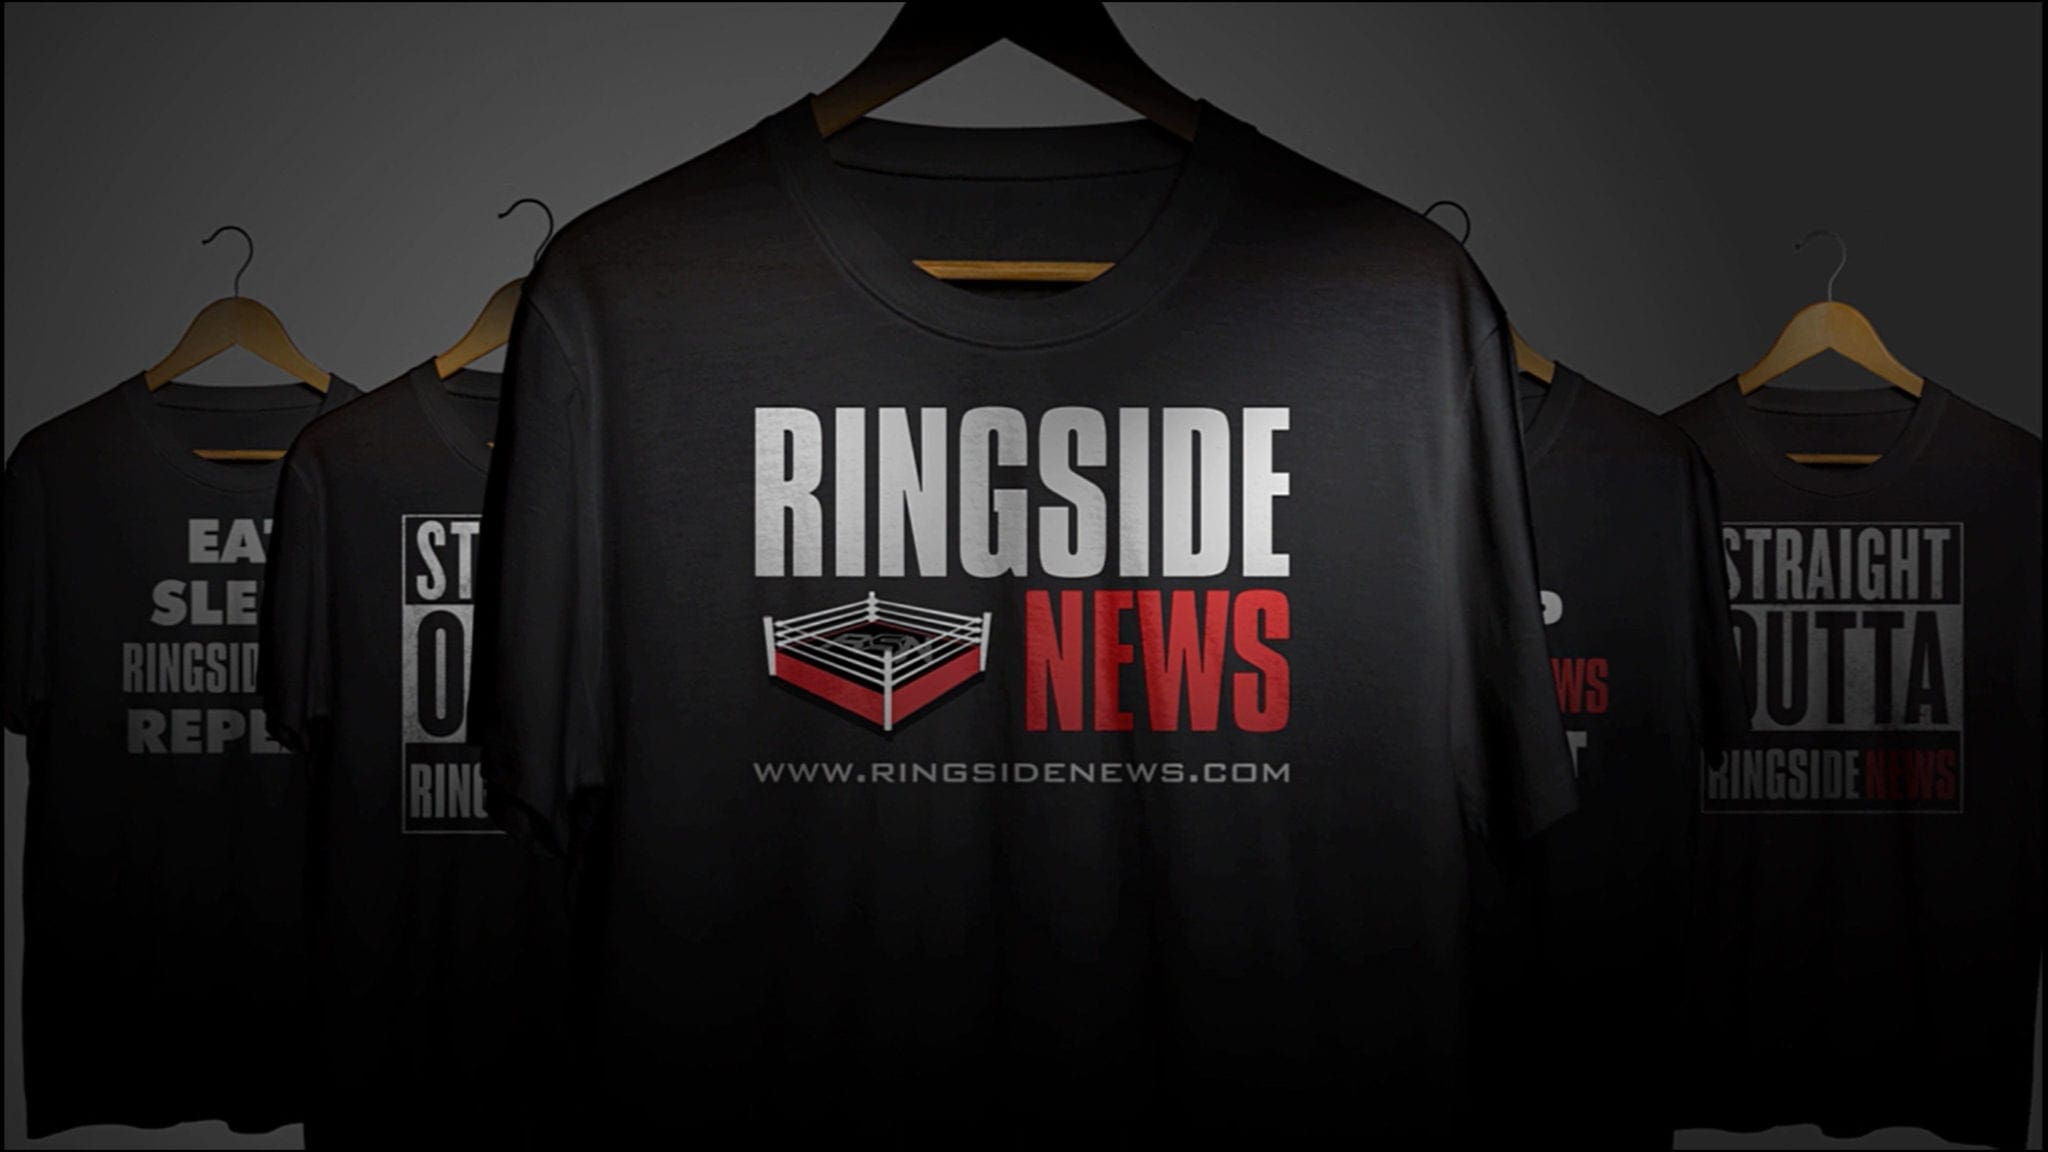 Ringside News RAW T-Shirt Giveaway